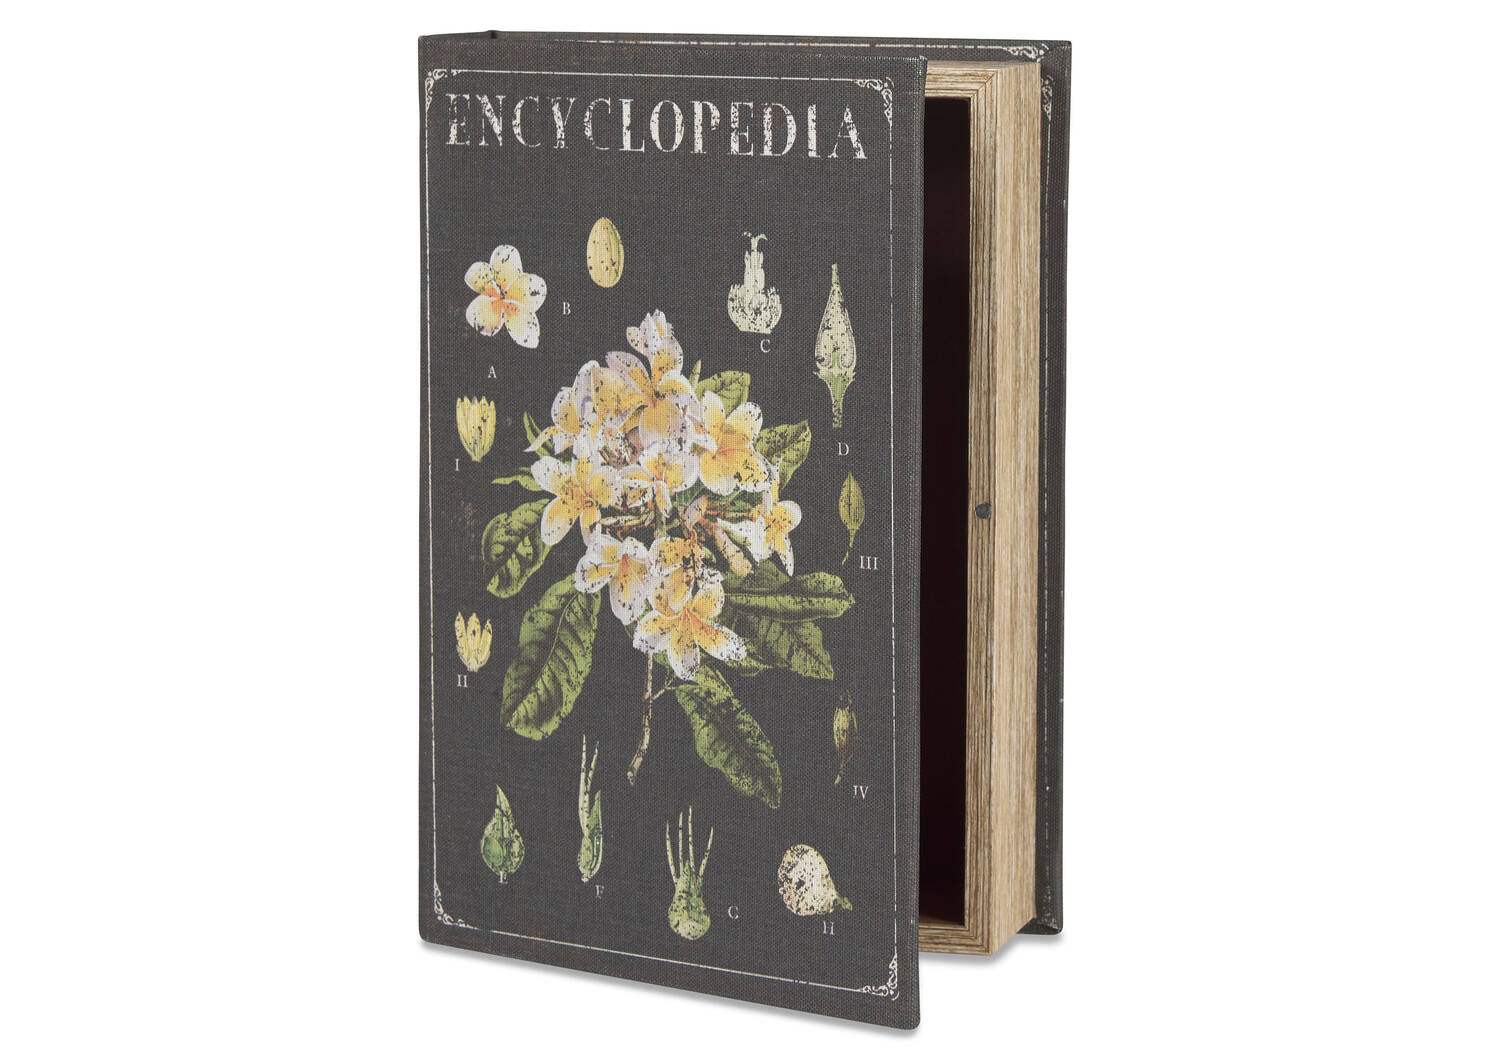 Grande boîte-livre Encyclopedia noire